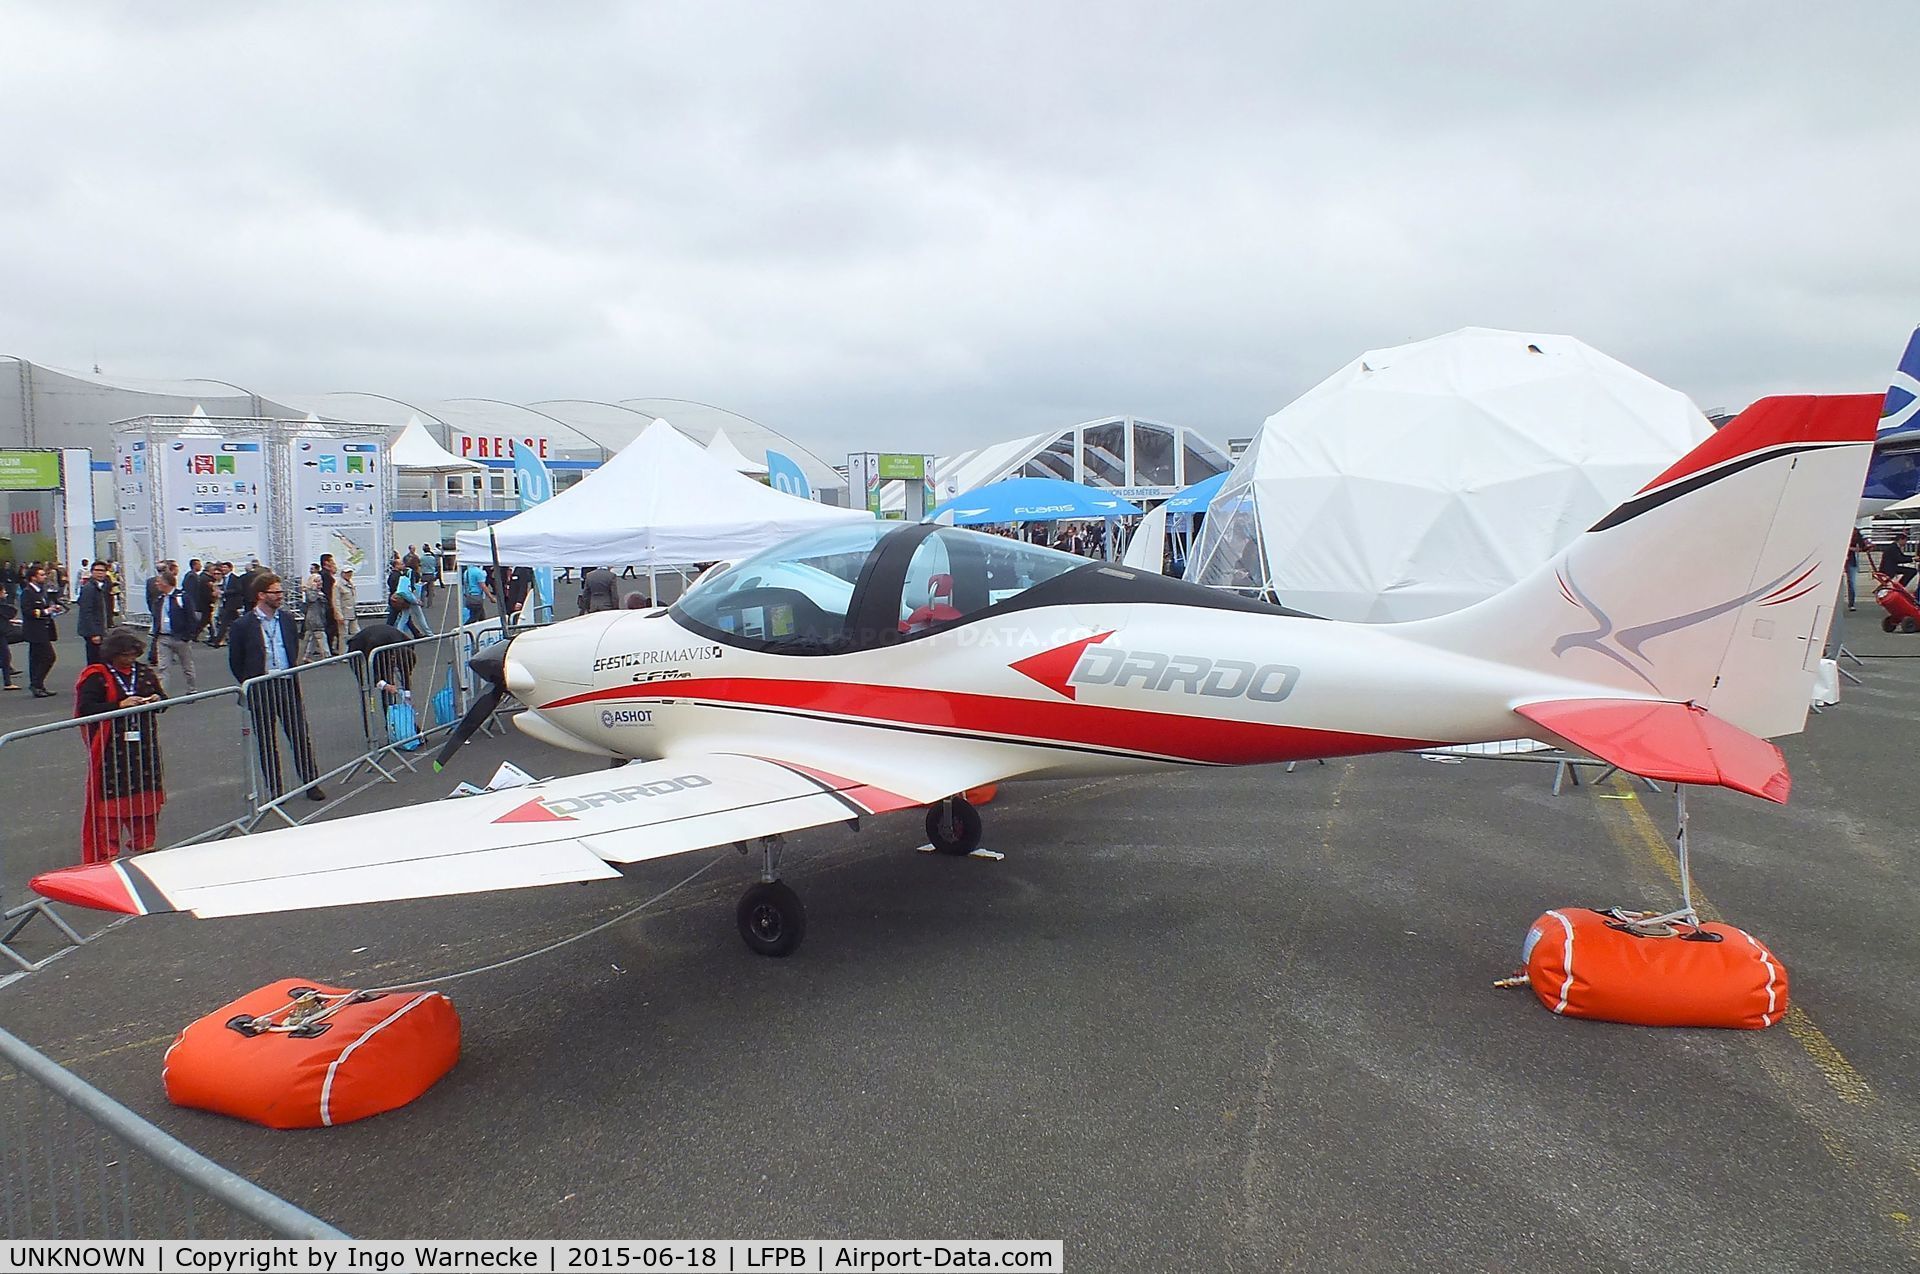 UNKNOWN, 2015 CFM-Air Dardo C/N 01, CFM Air Dardo hybrid with Rotax and electric motor at the Aerosalon 2015, Paris